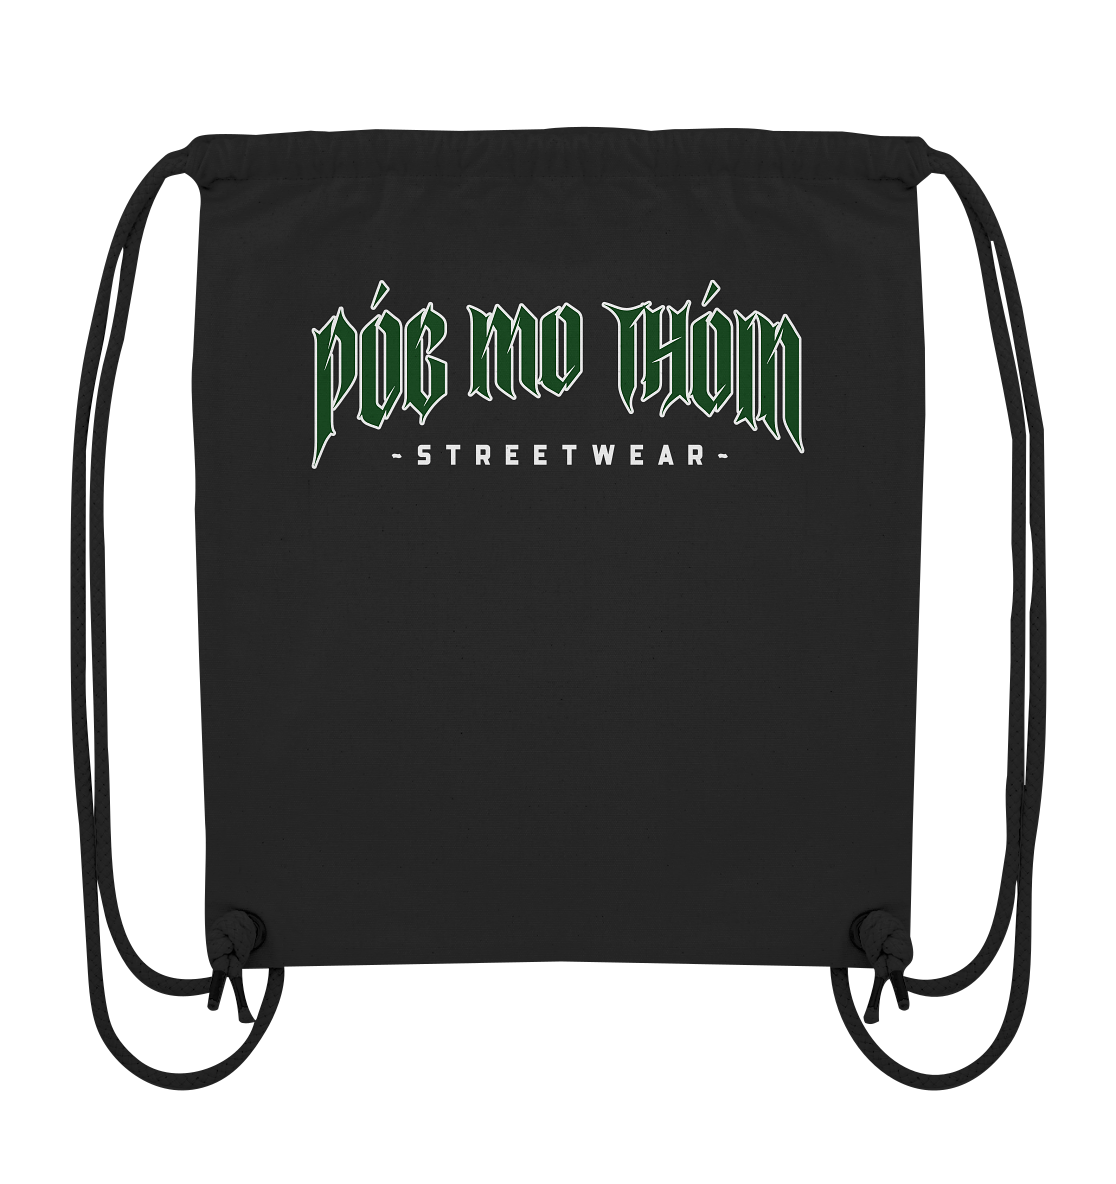 Póg Mo Thóin Streetwear "Green Logo" - Organic Gym-Bag